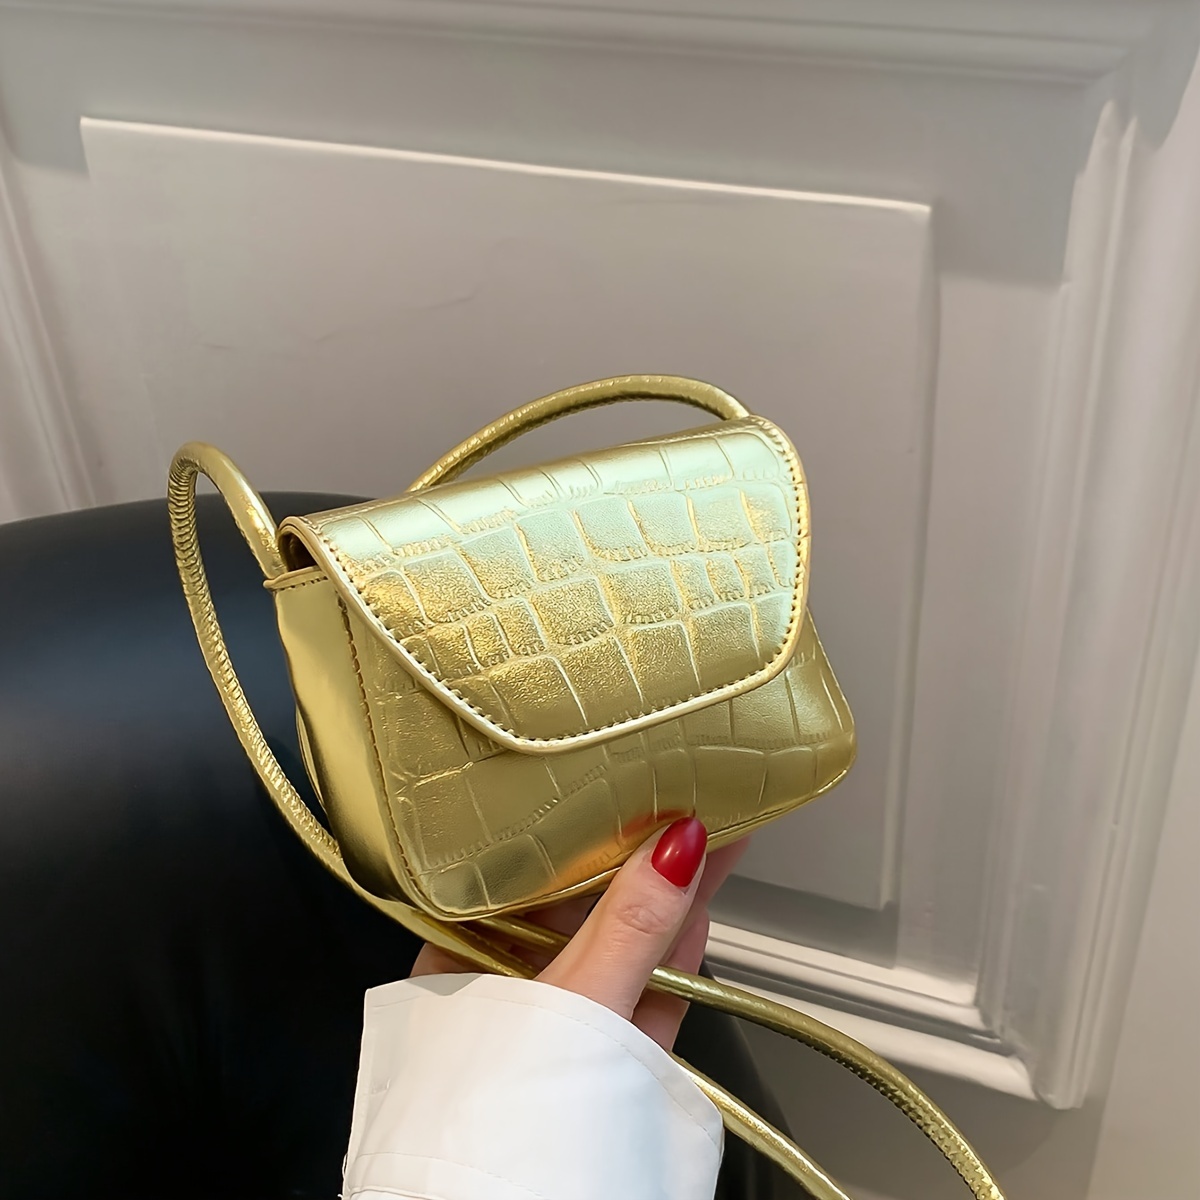 Golden, Crossbody Bag